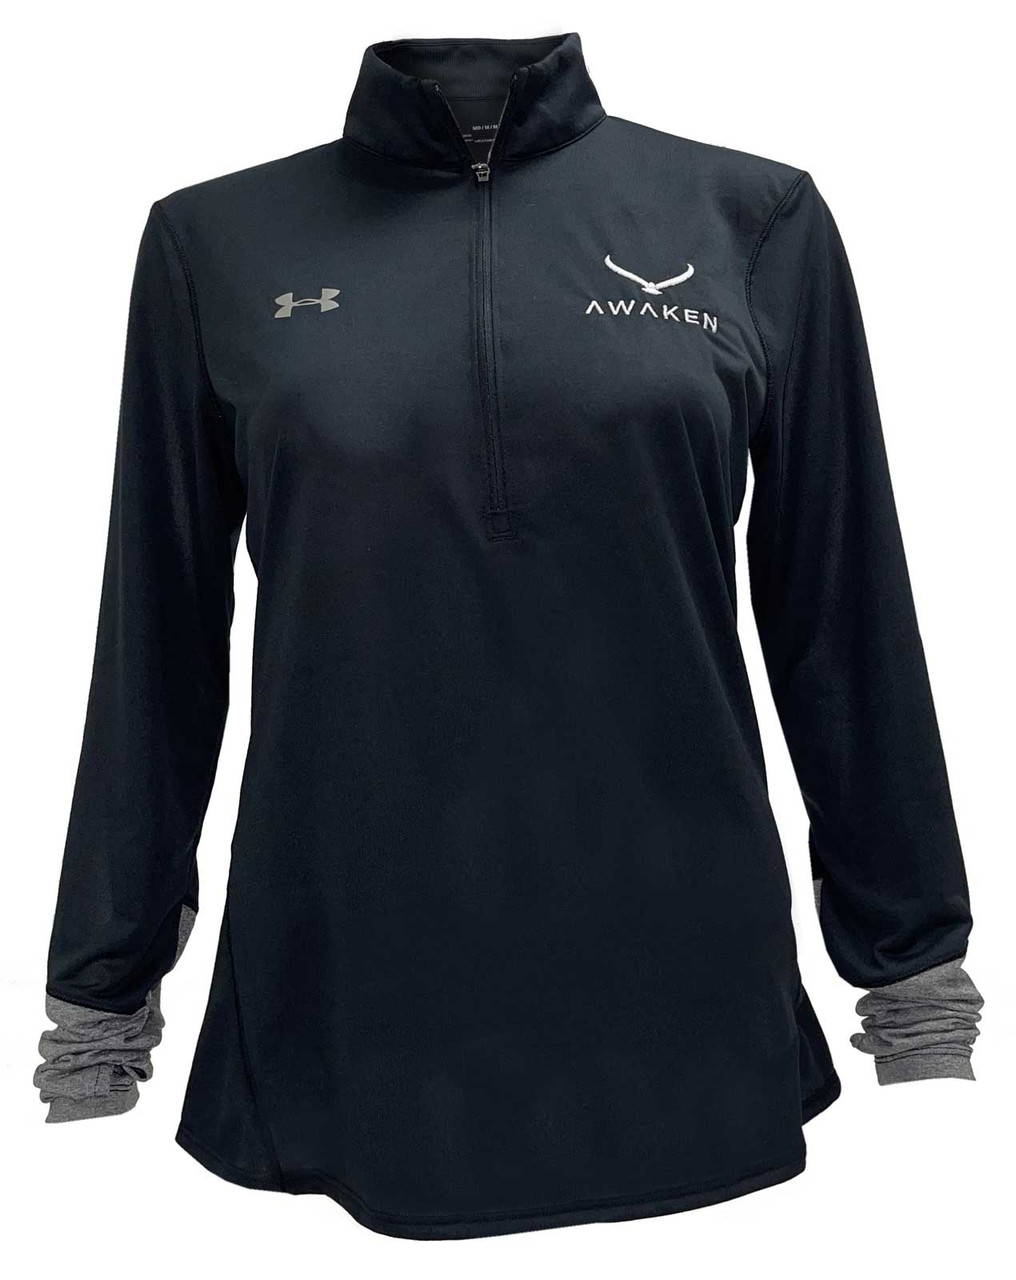 Under Armour UA Women's Awaken Eagle Black � Zip Pullover Shirt Thumb Hole  - Sports Diamond